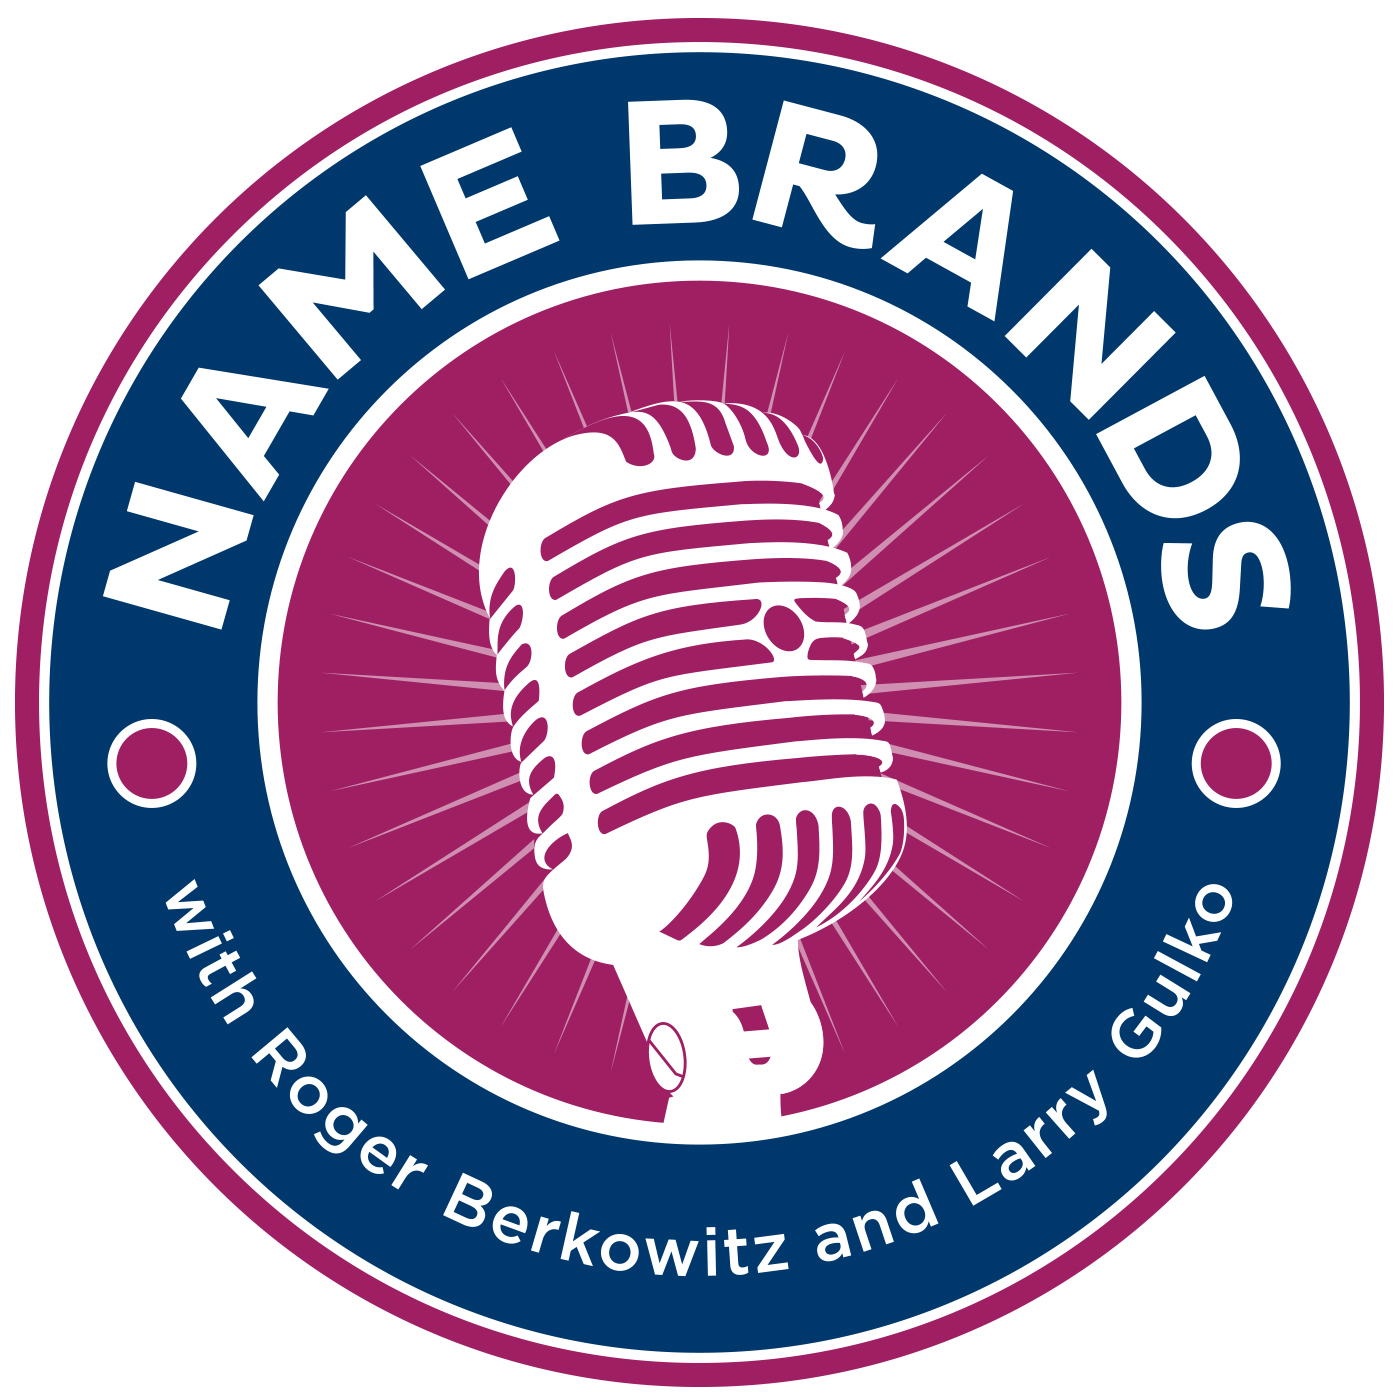 Name Brands